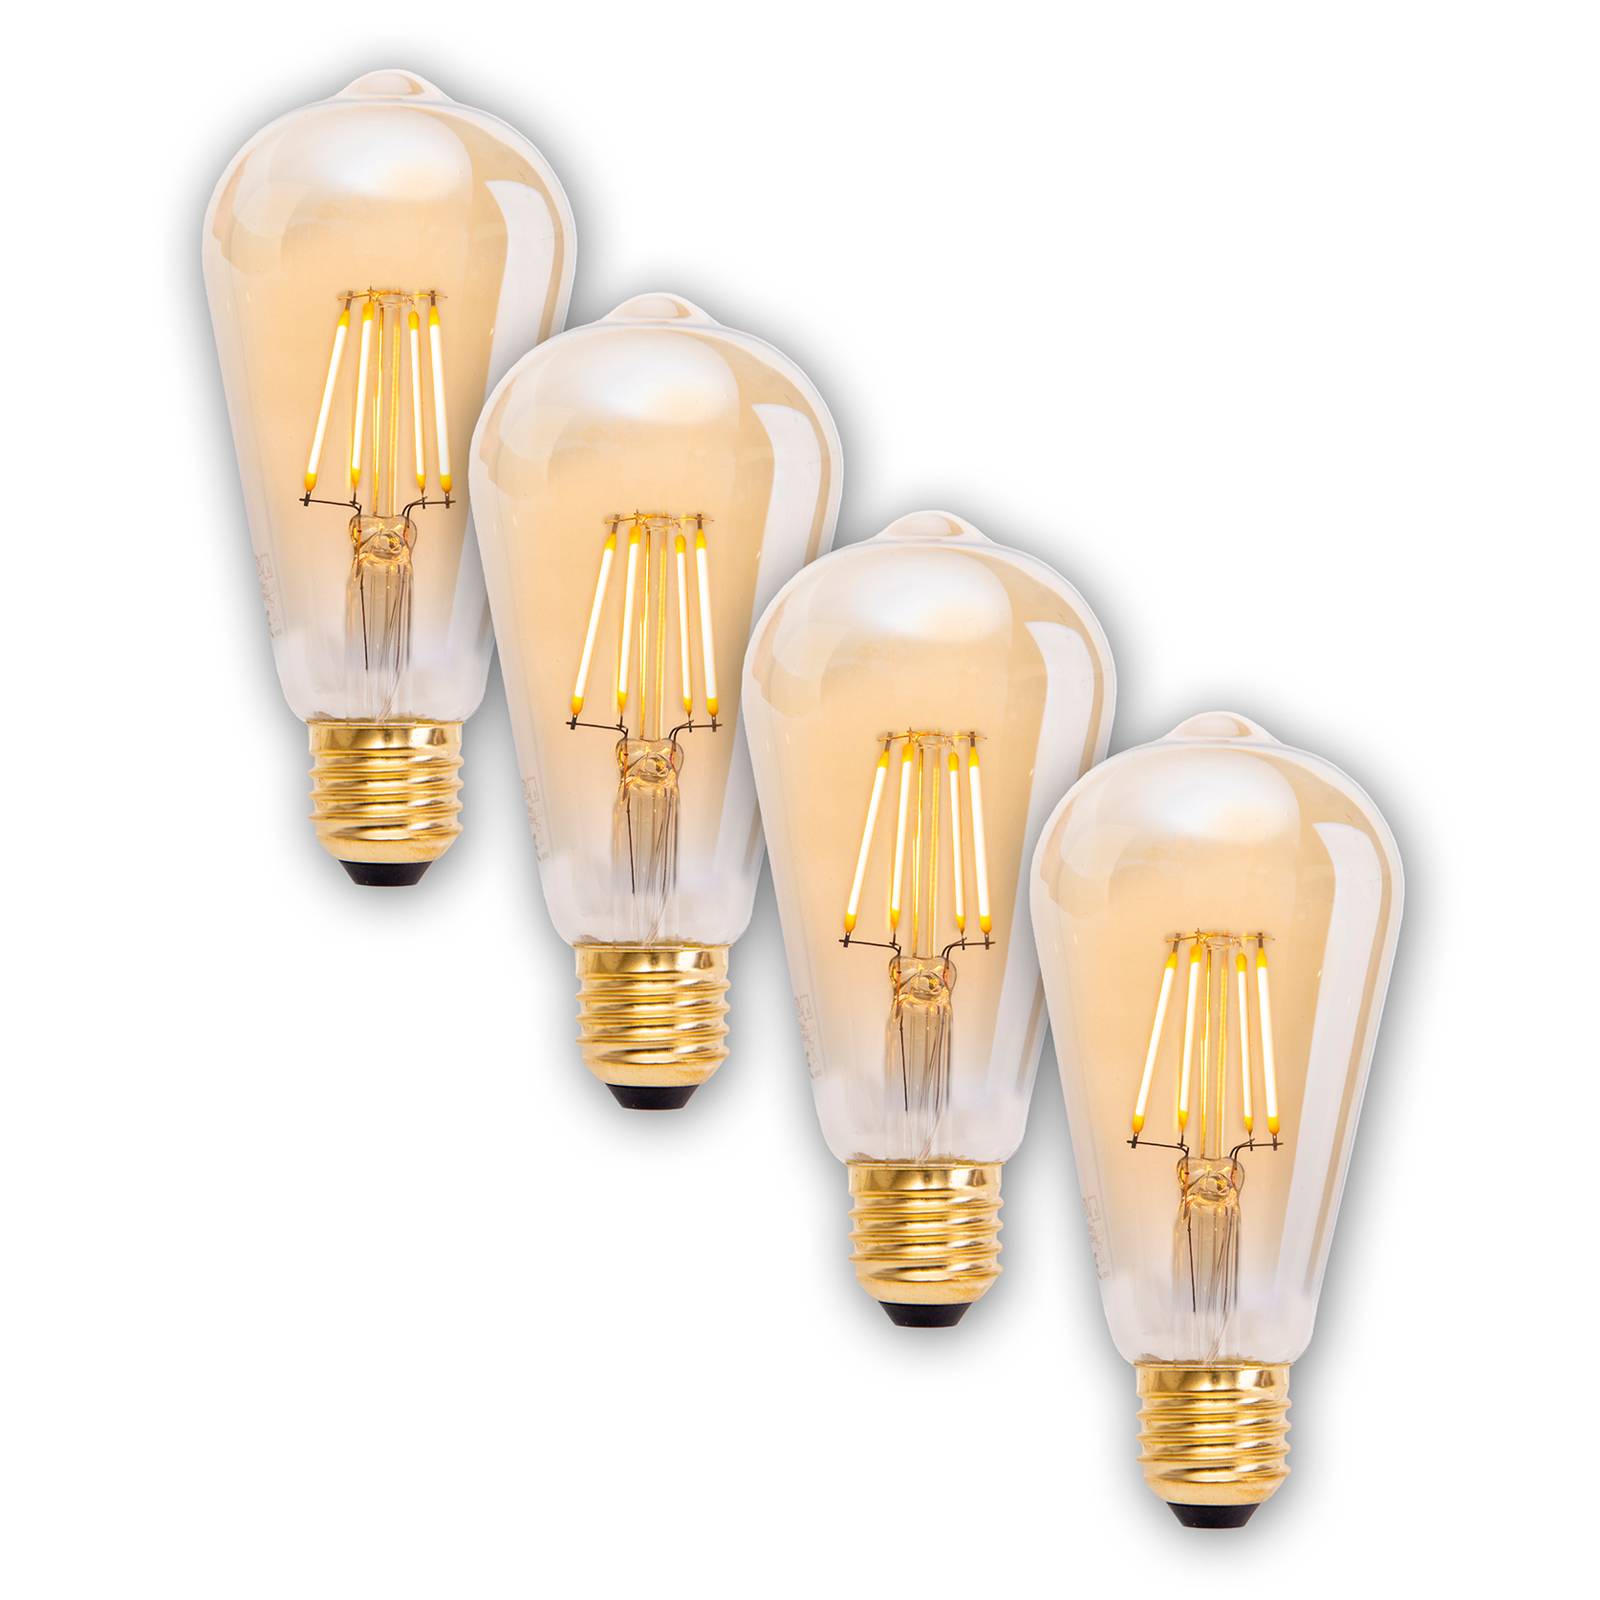 Naeve Leuchten LED-Lampe E27 4W 320lm warmweiß dimmbar 4er-Set